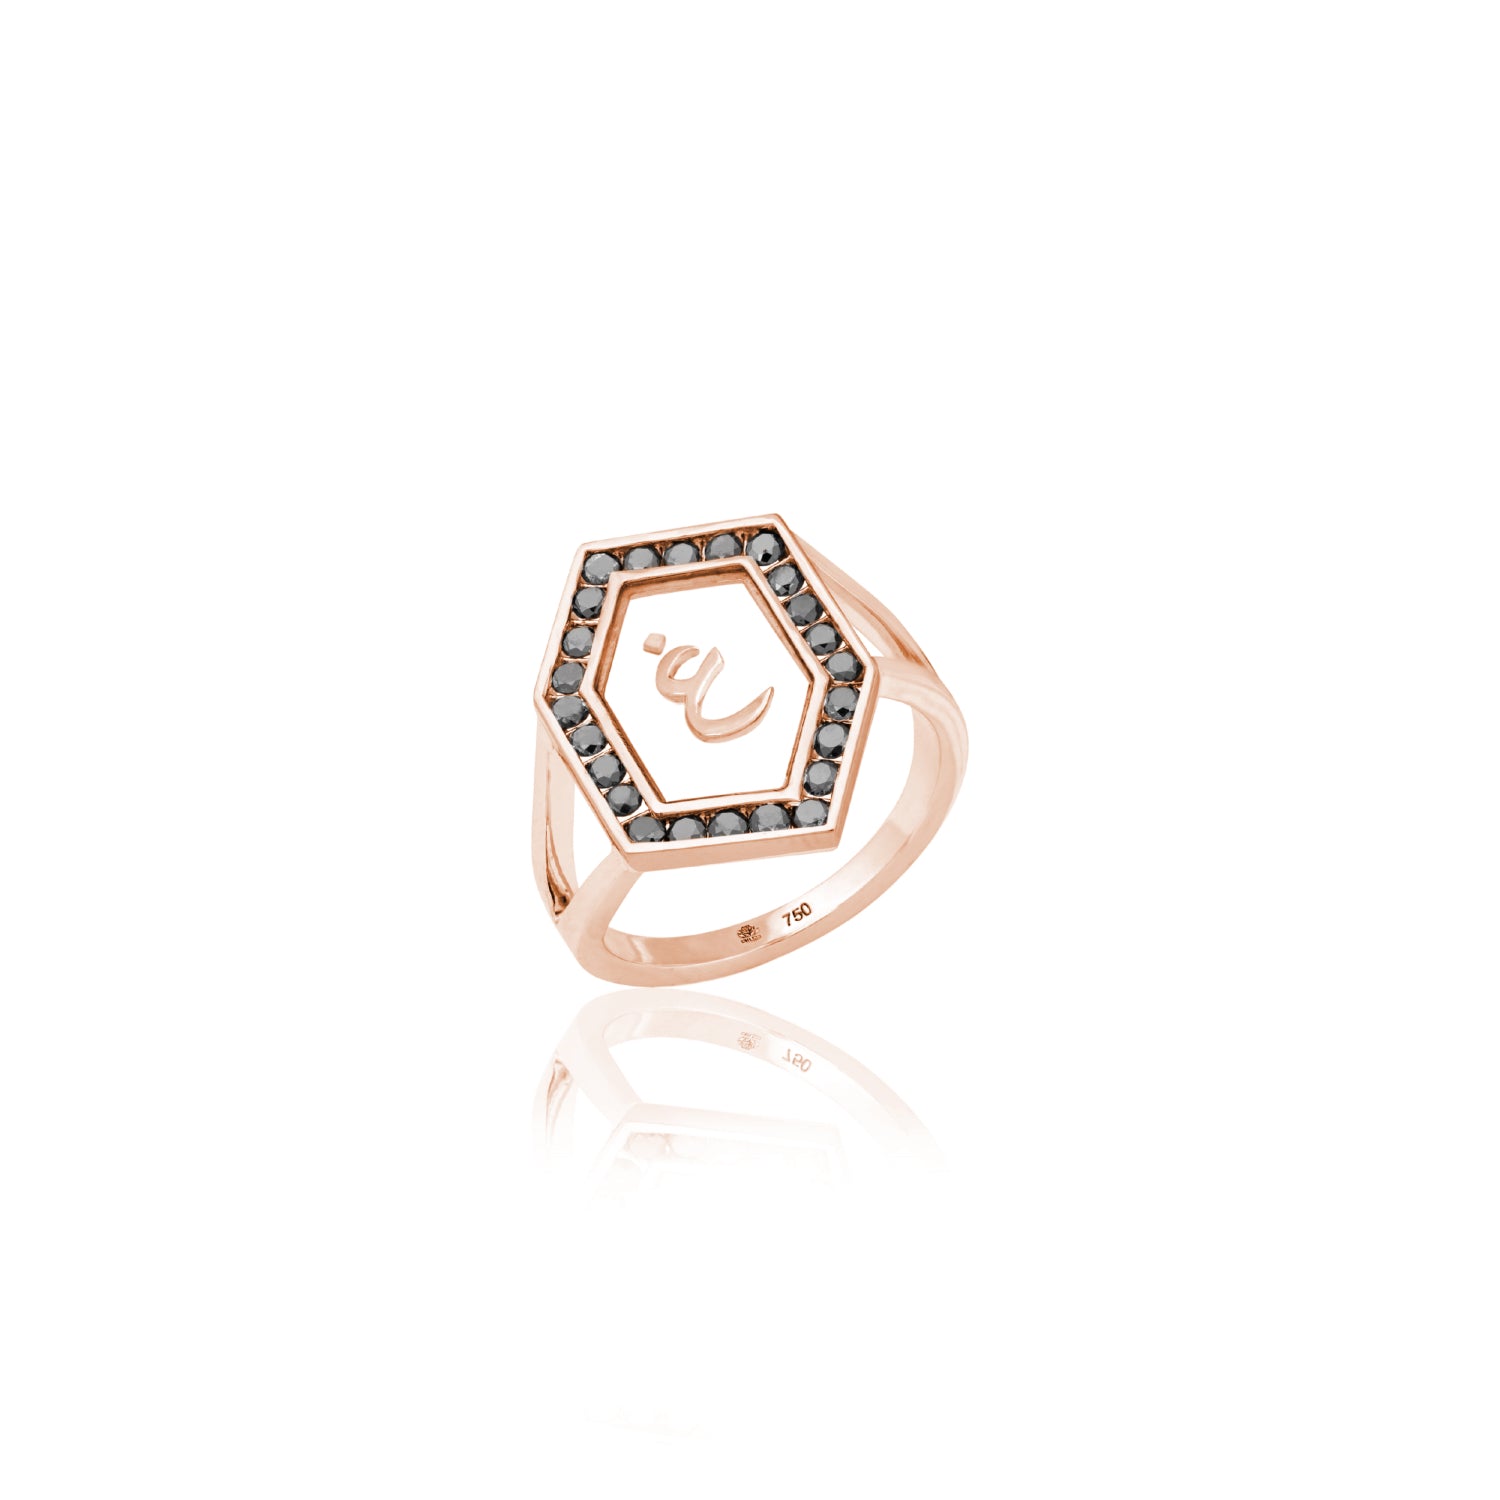 Qamoos 1.0 Letter غ Black Diamond Ring in Rose Gold